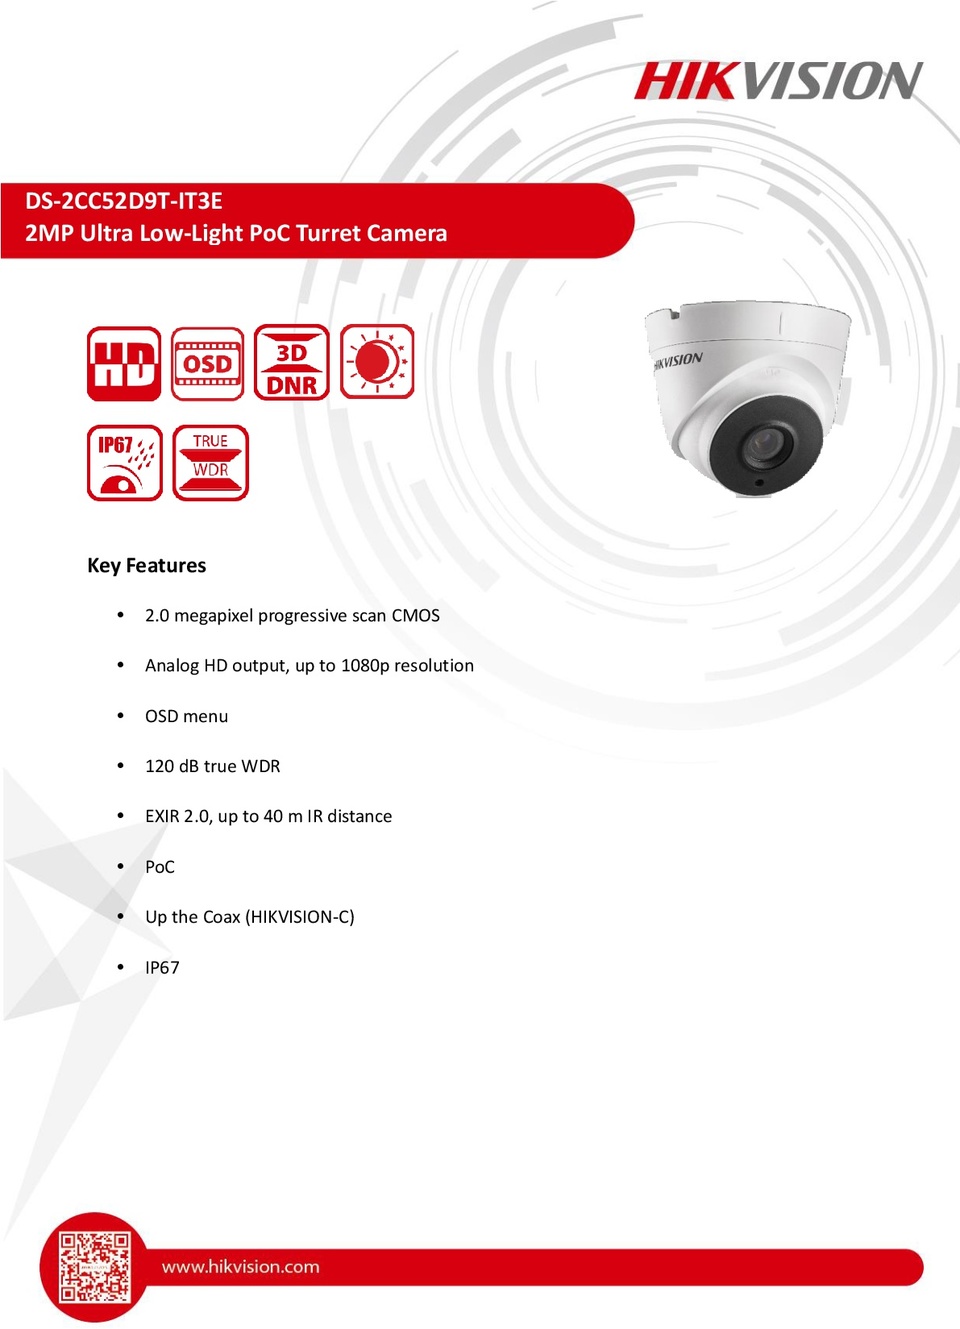 Hikvision DS-2CC52D9T-IT3E HD-TVI 2MP Starlight Turret Camera With 2.8mm Lens 0